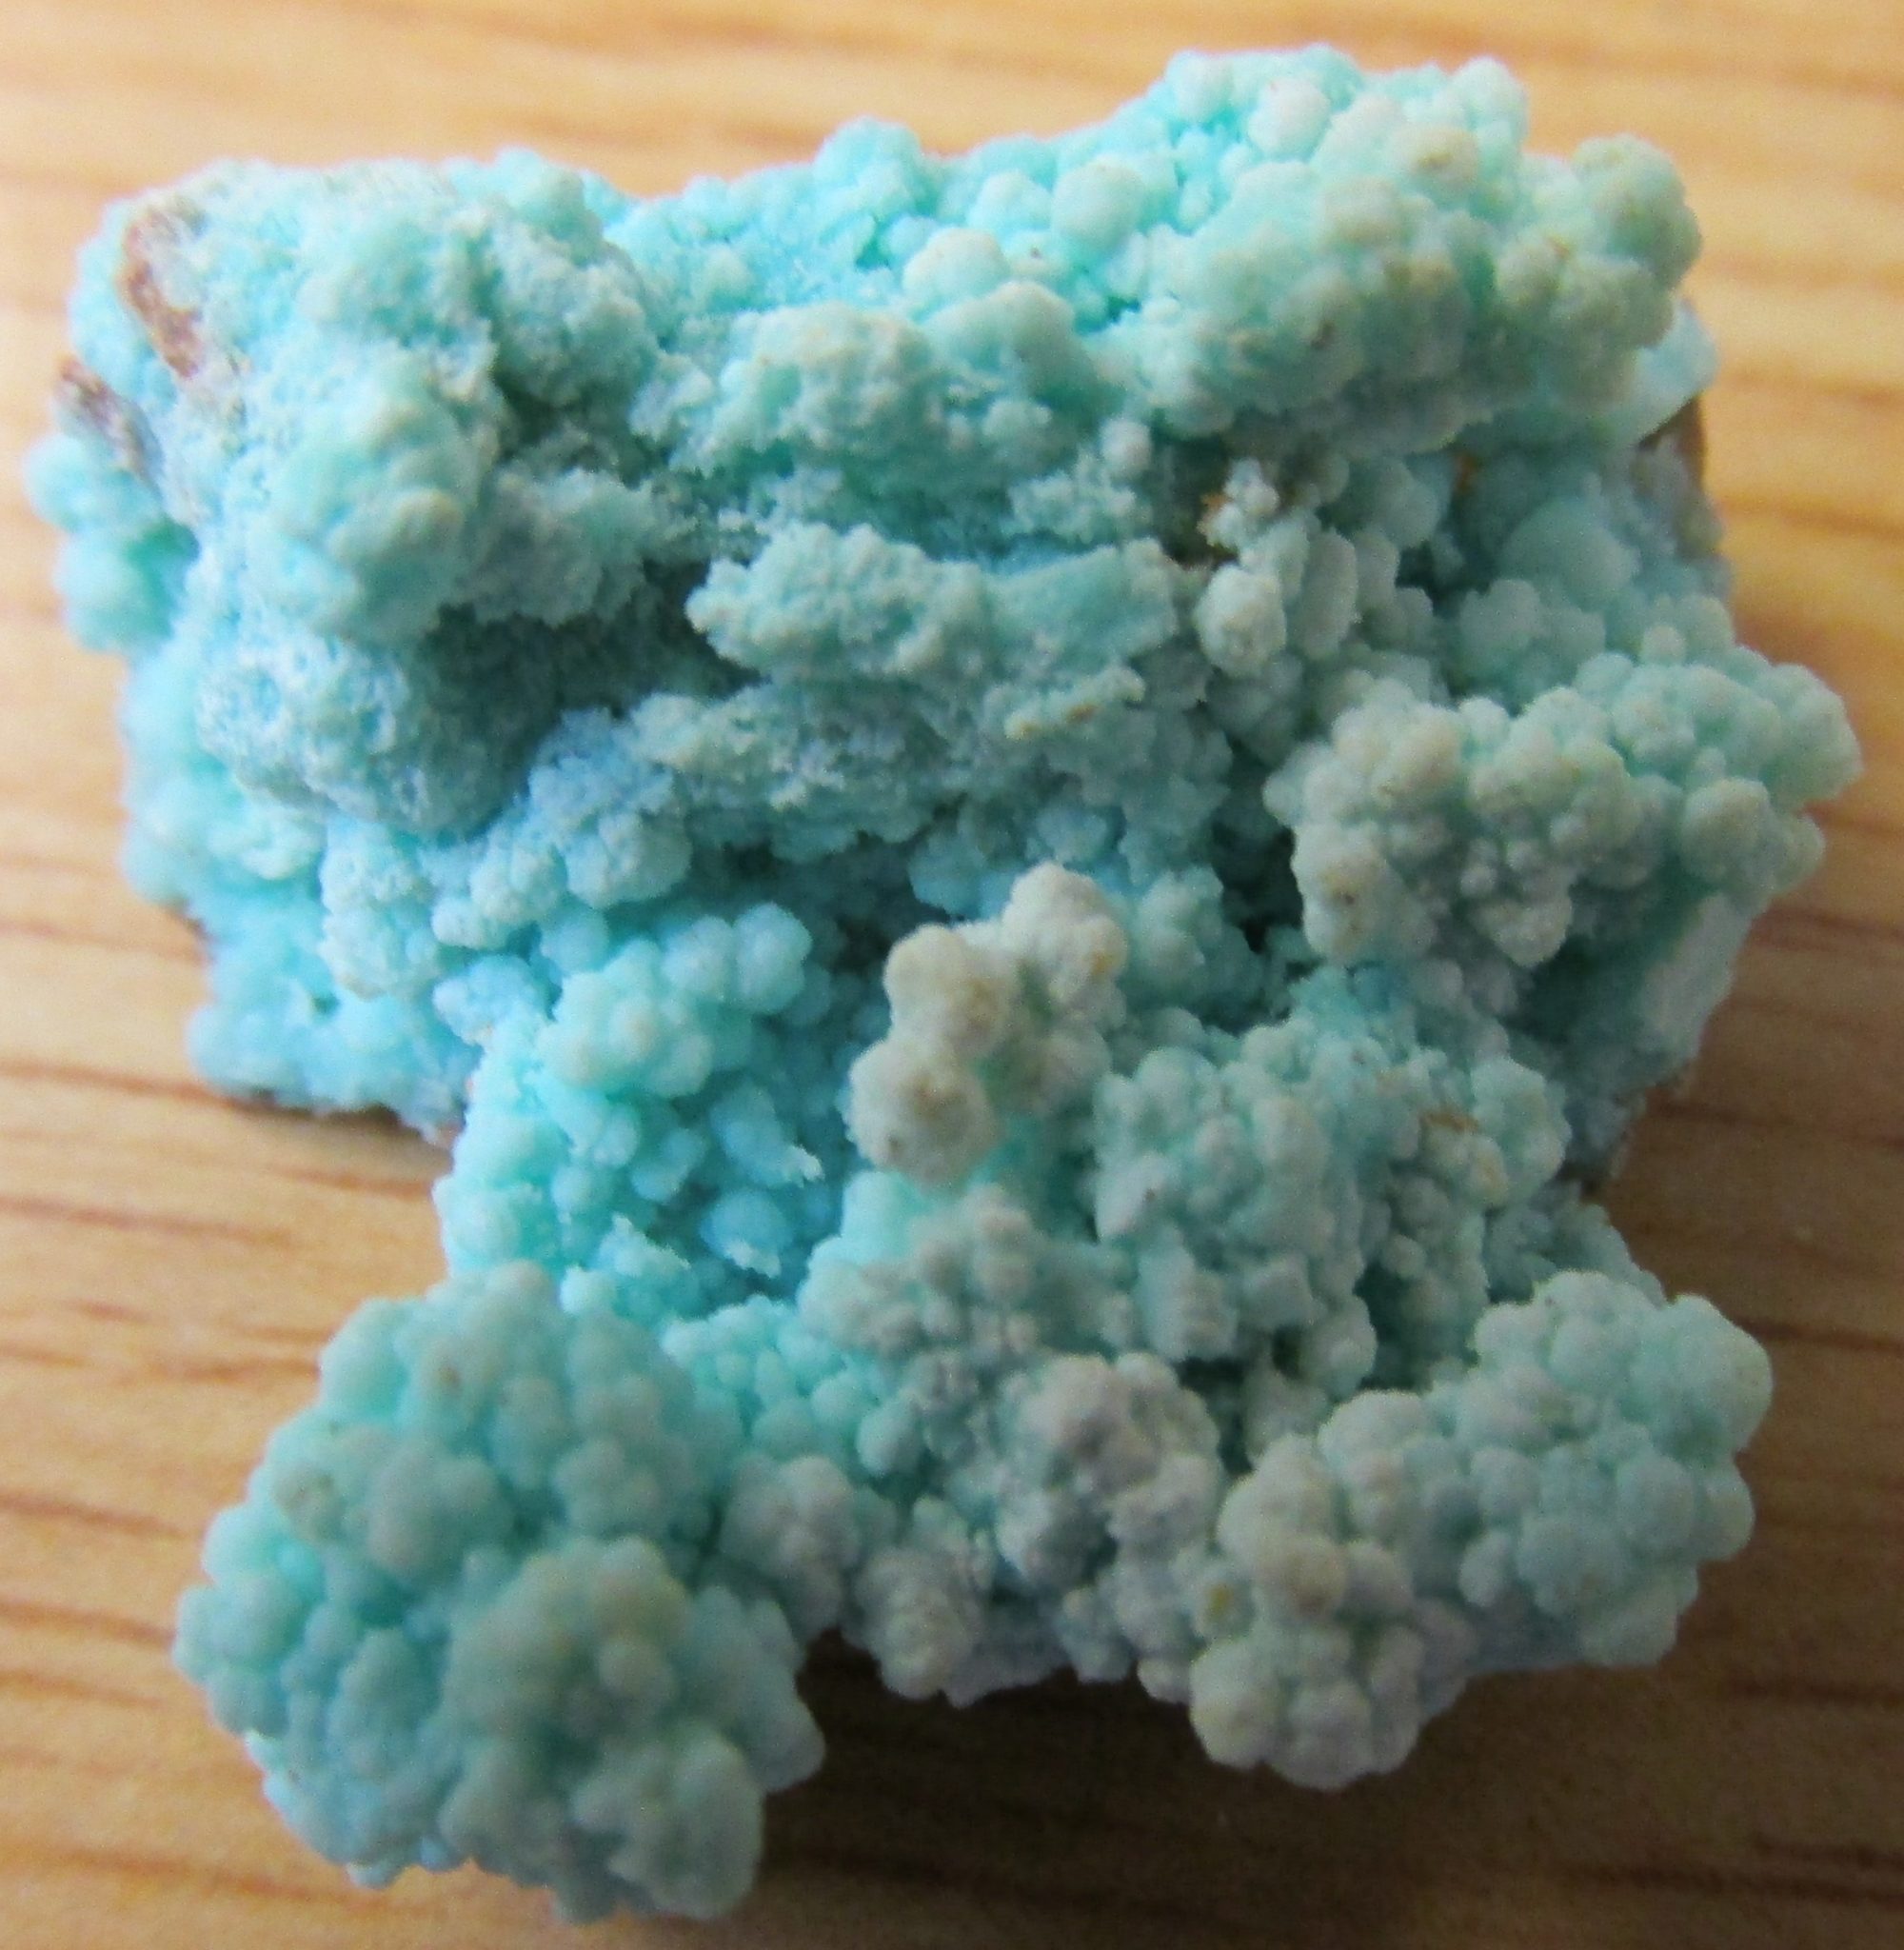 Sleeping Beauty Turquoise crystallized nuggets